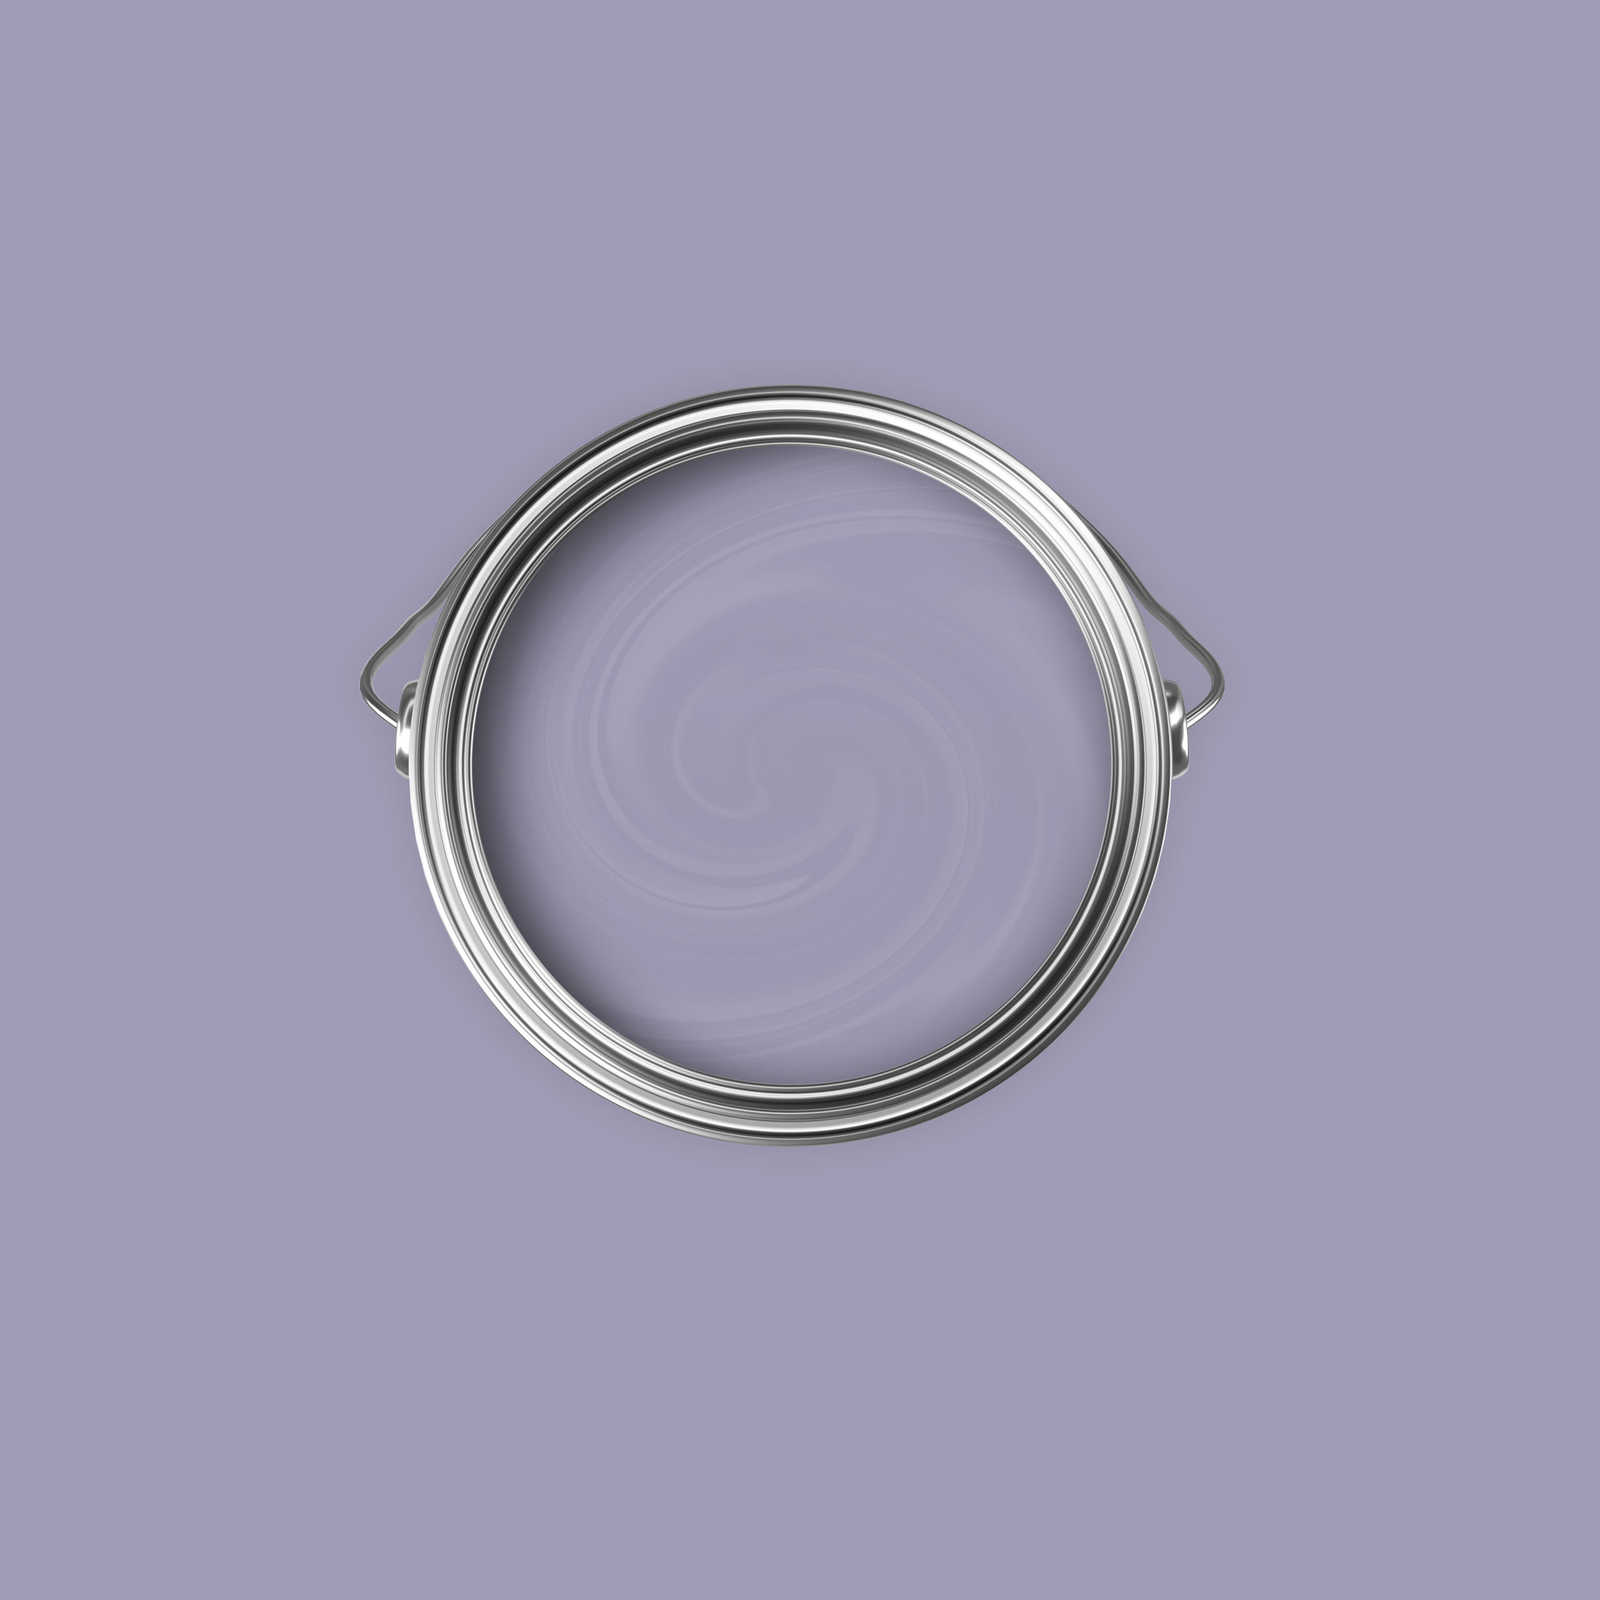             Premium Muurverf Sensitive Lilac »Magical Mauve« NW204 – 2,5 Liter
        